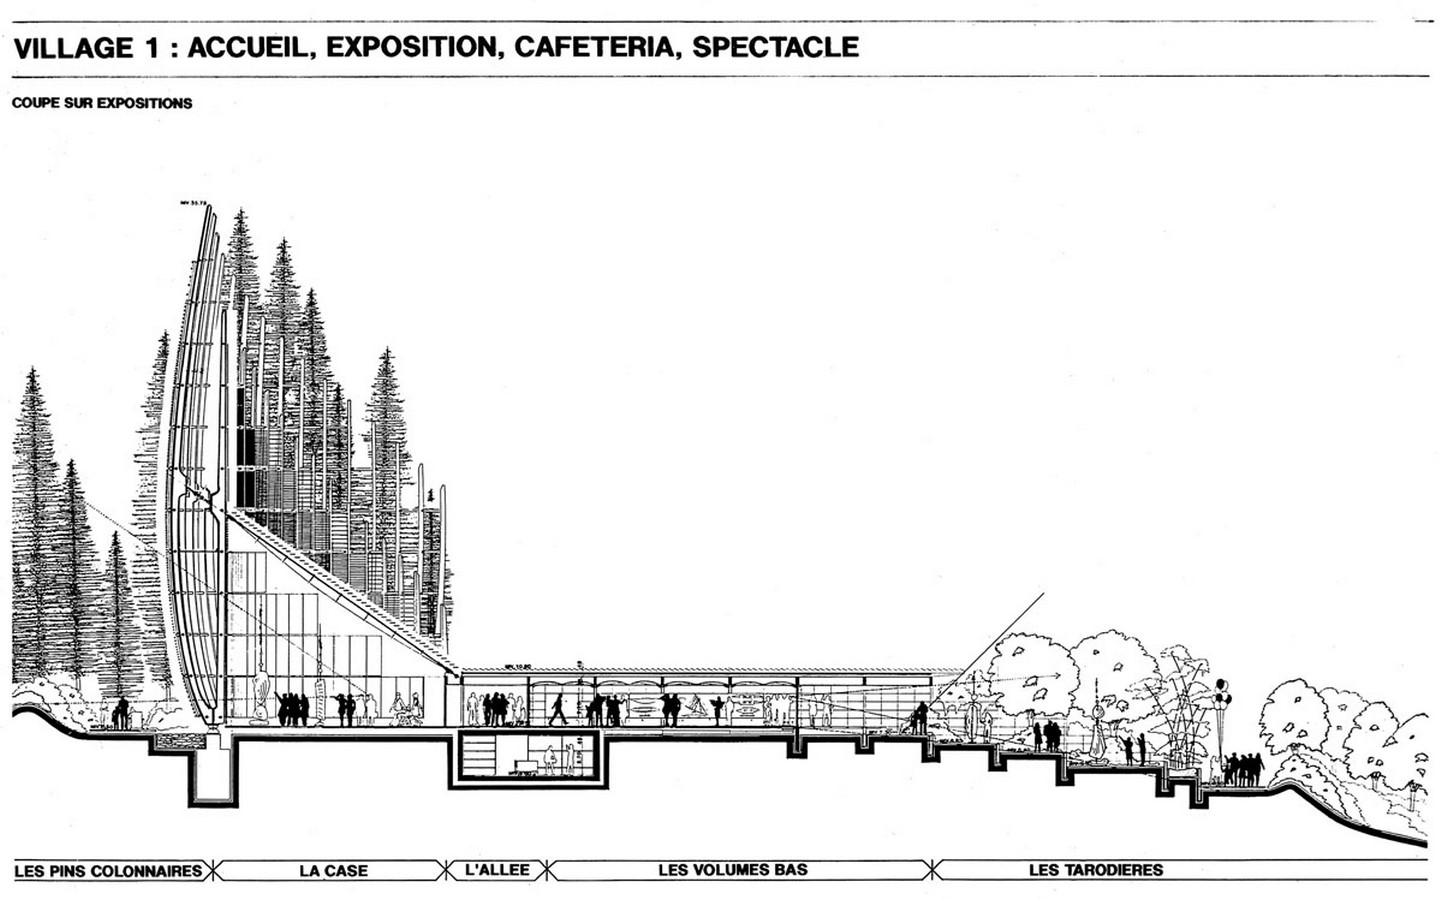 Jean-Marie Cultural Center by Renzo Piano: Symbolizing the Kanak civilization - sheet 8